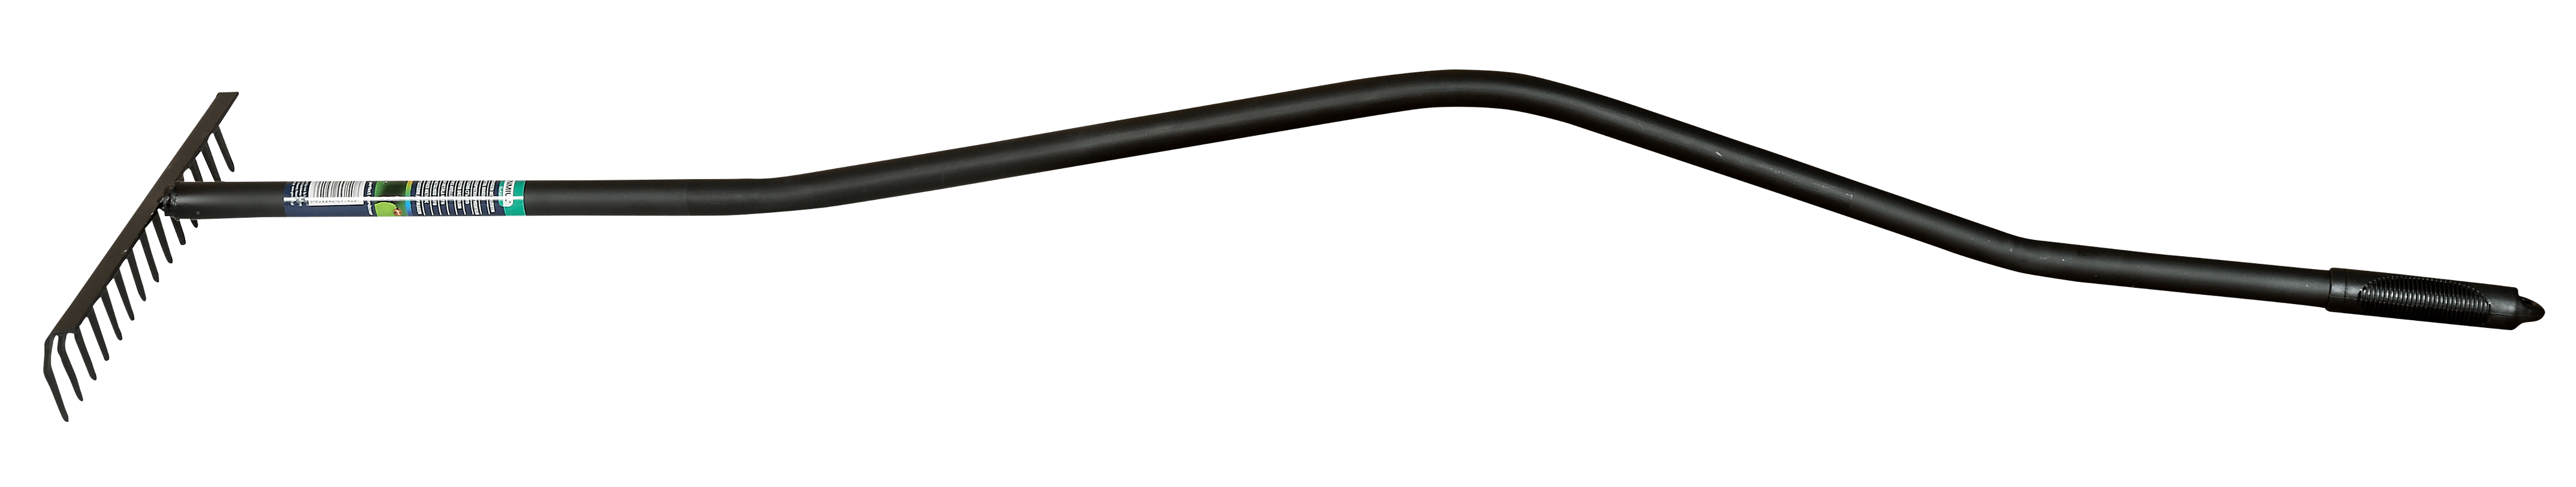 16-tooth rake with an ergonomic metal handle